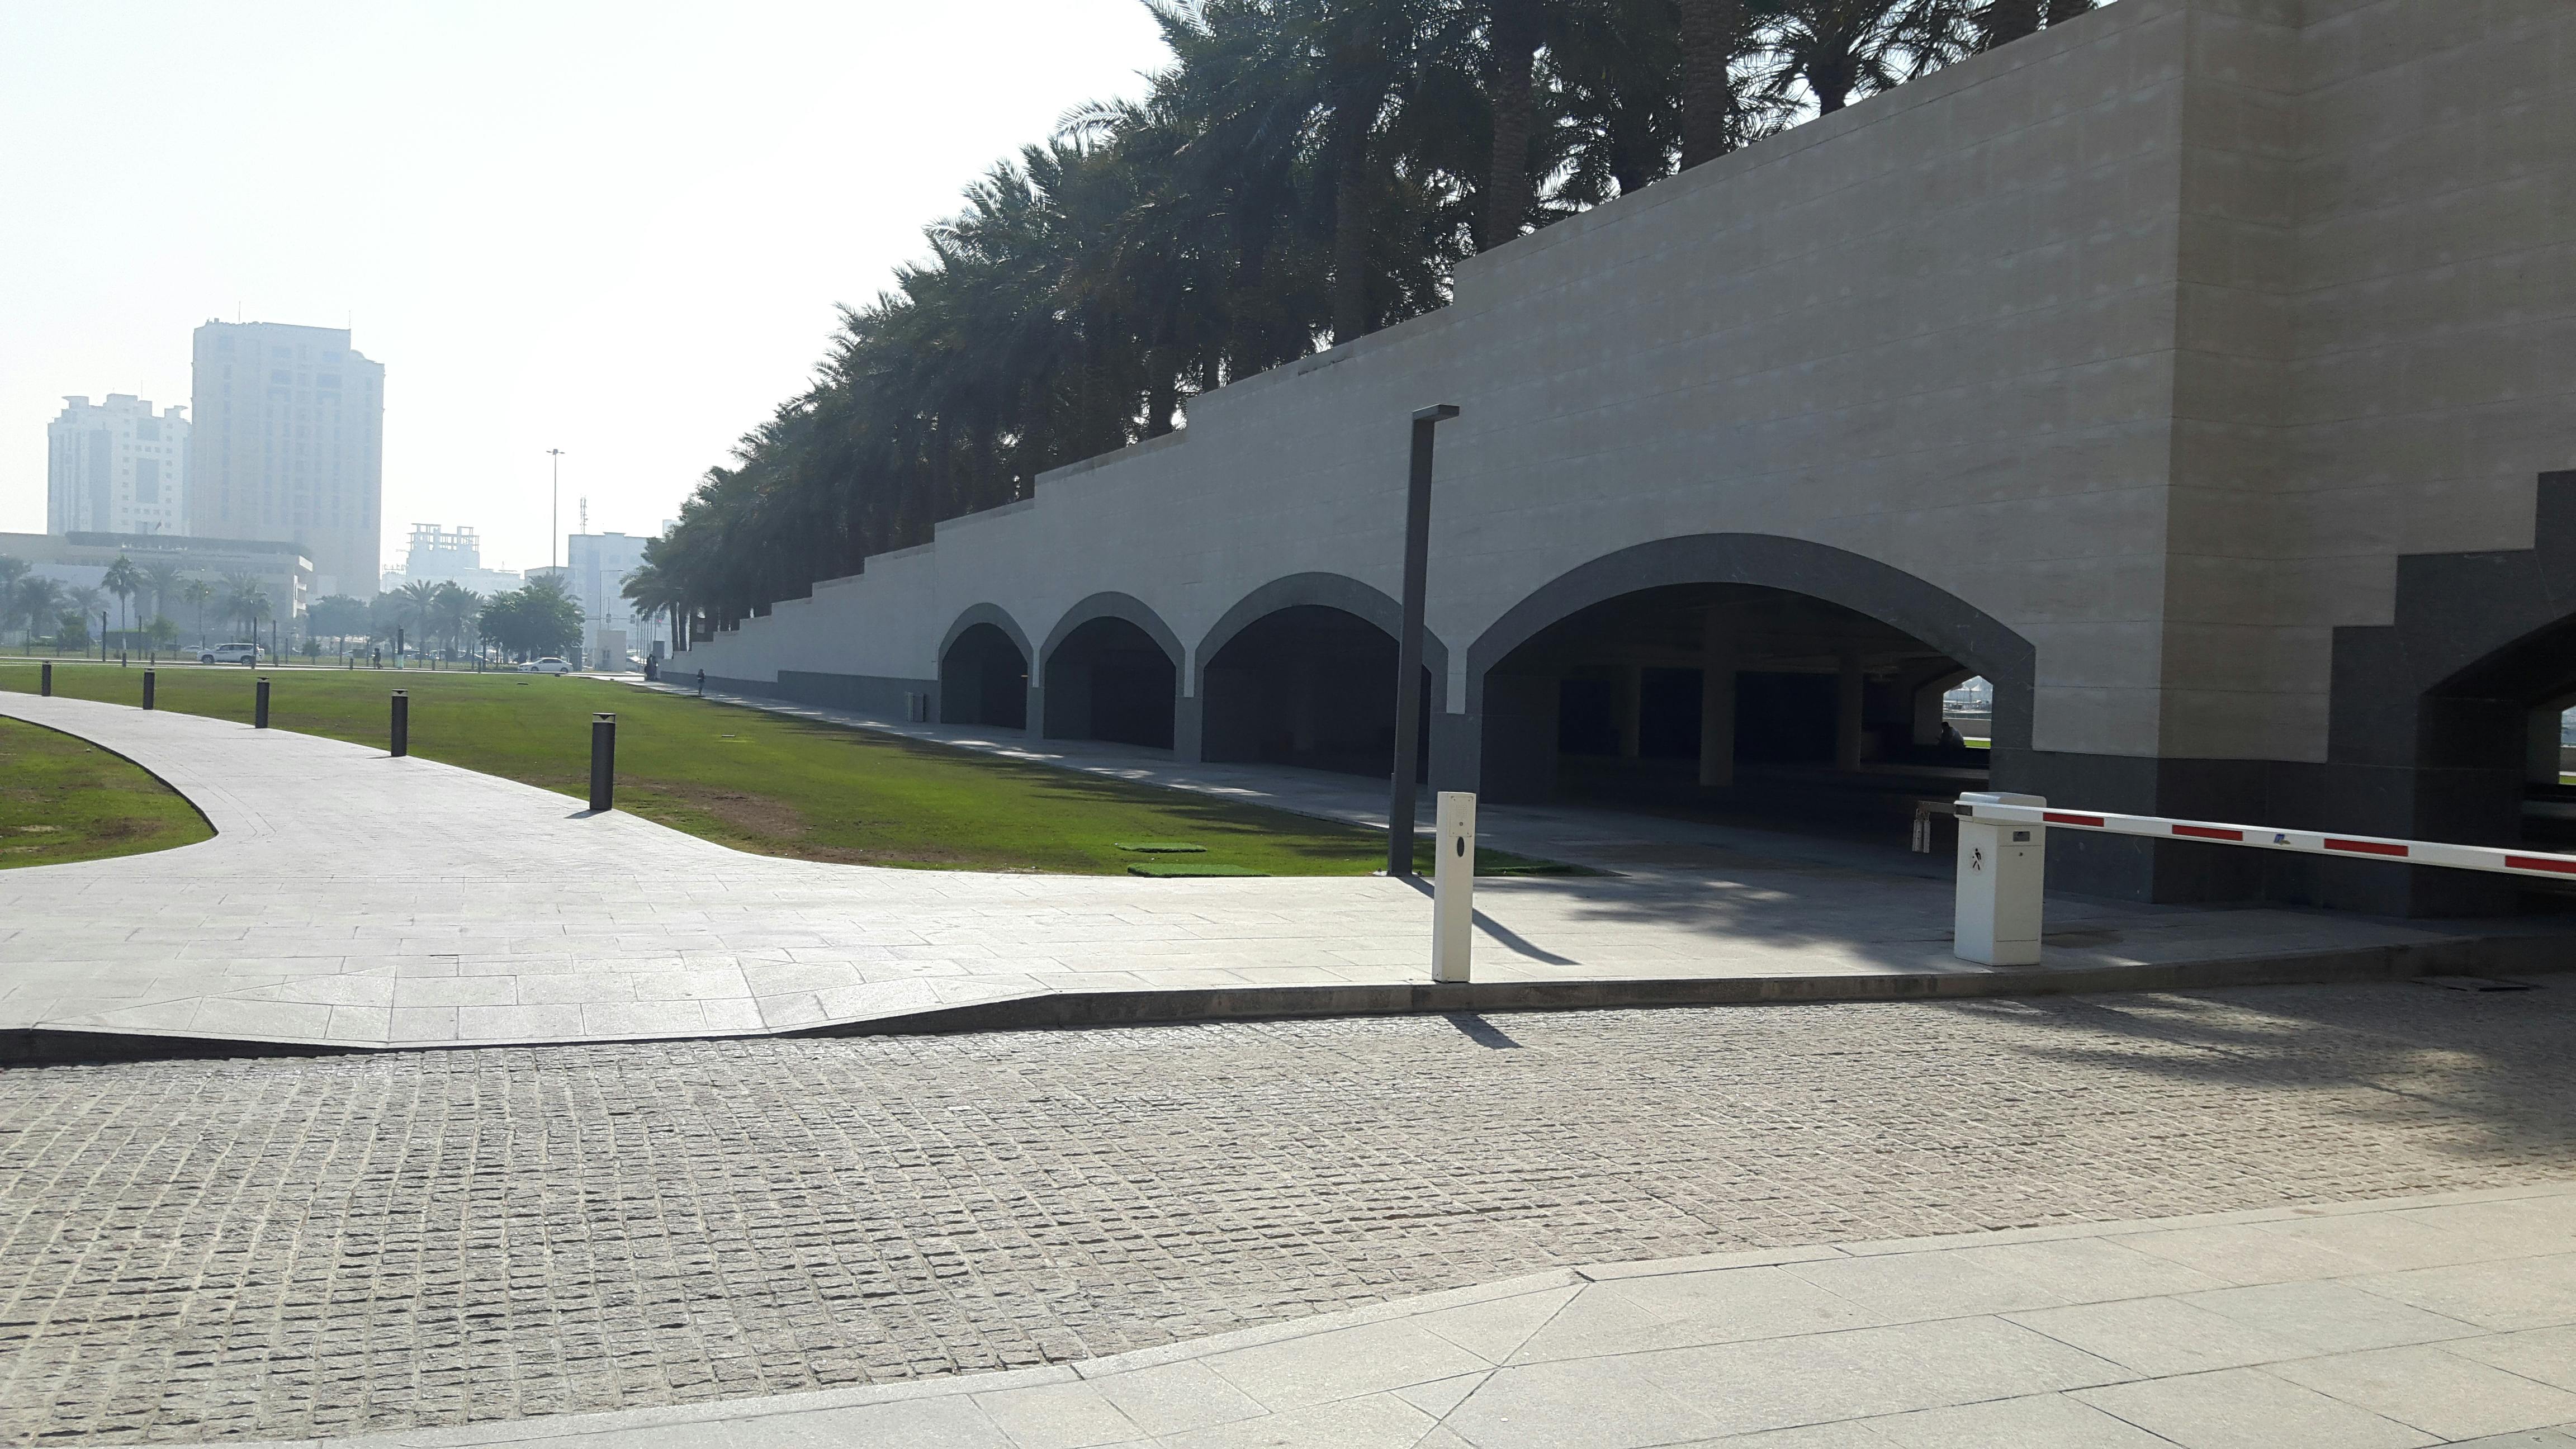 Free stock photo of Park beside museum of Islamic art